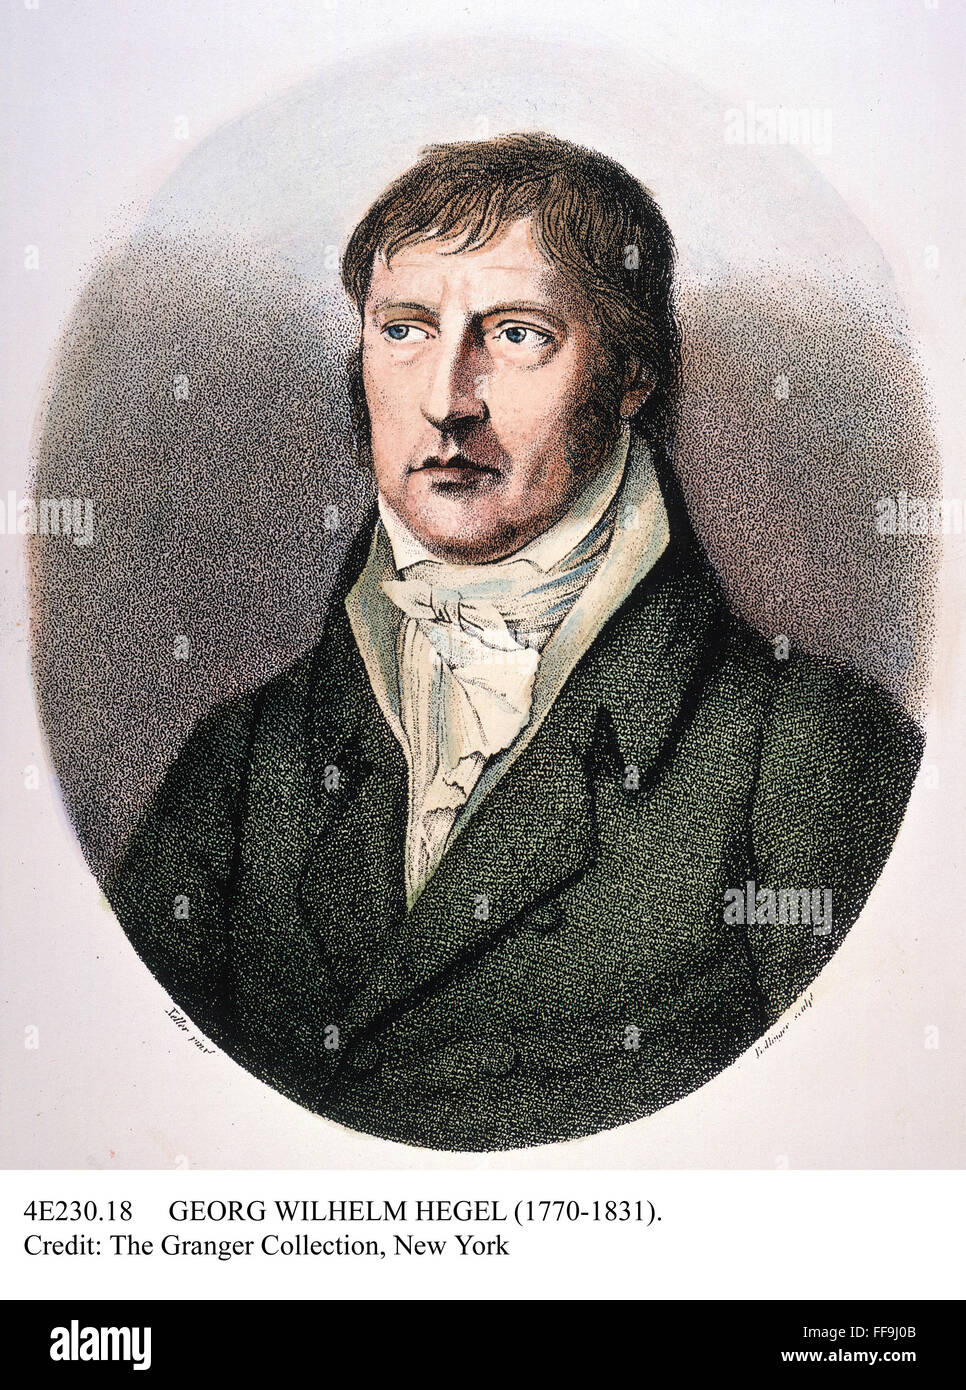 GEORG WILHELM HEGEL /n(1770-1831). Filosofo tedesco. Incisione imbianchini, tedesco del XIX secolo. Foto Stock